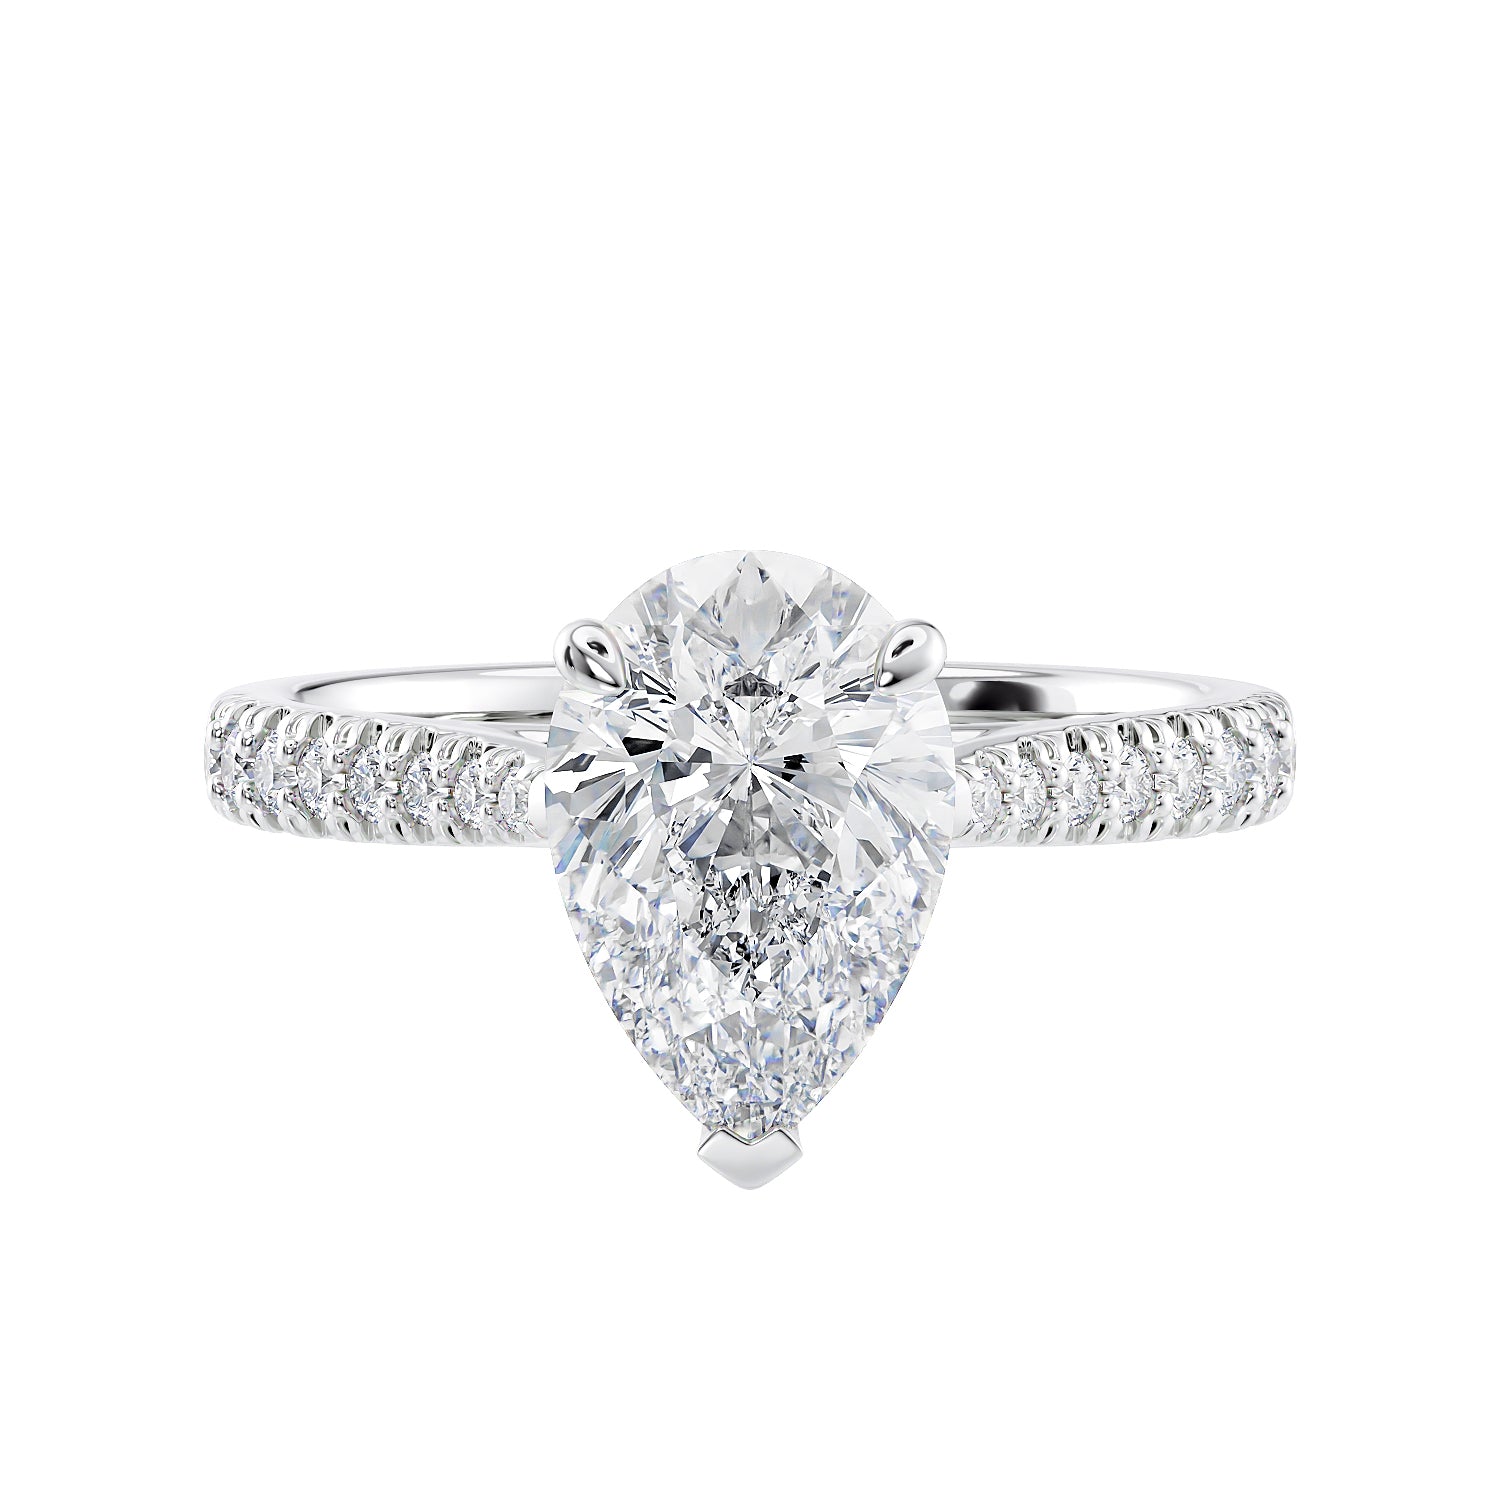 Pear shape diamond engagement ring dublin